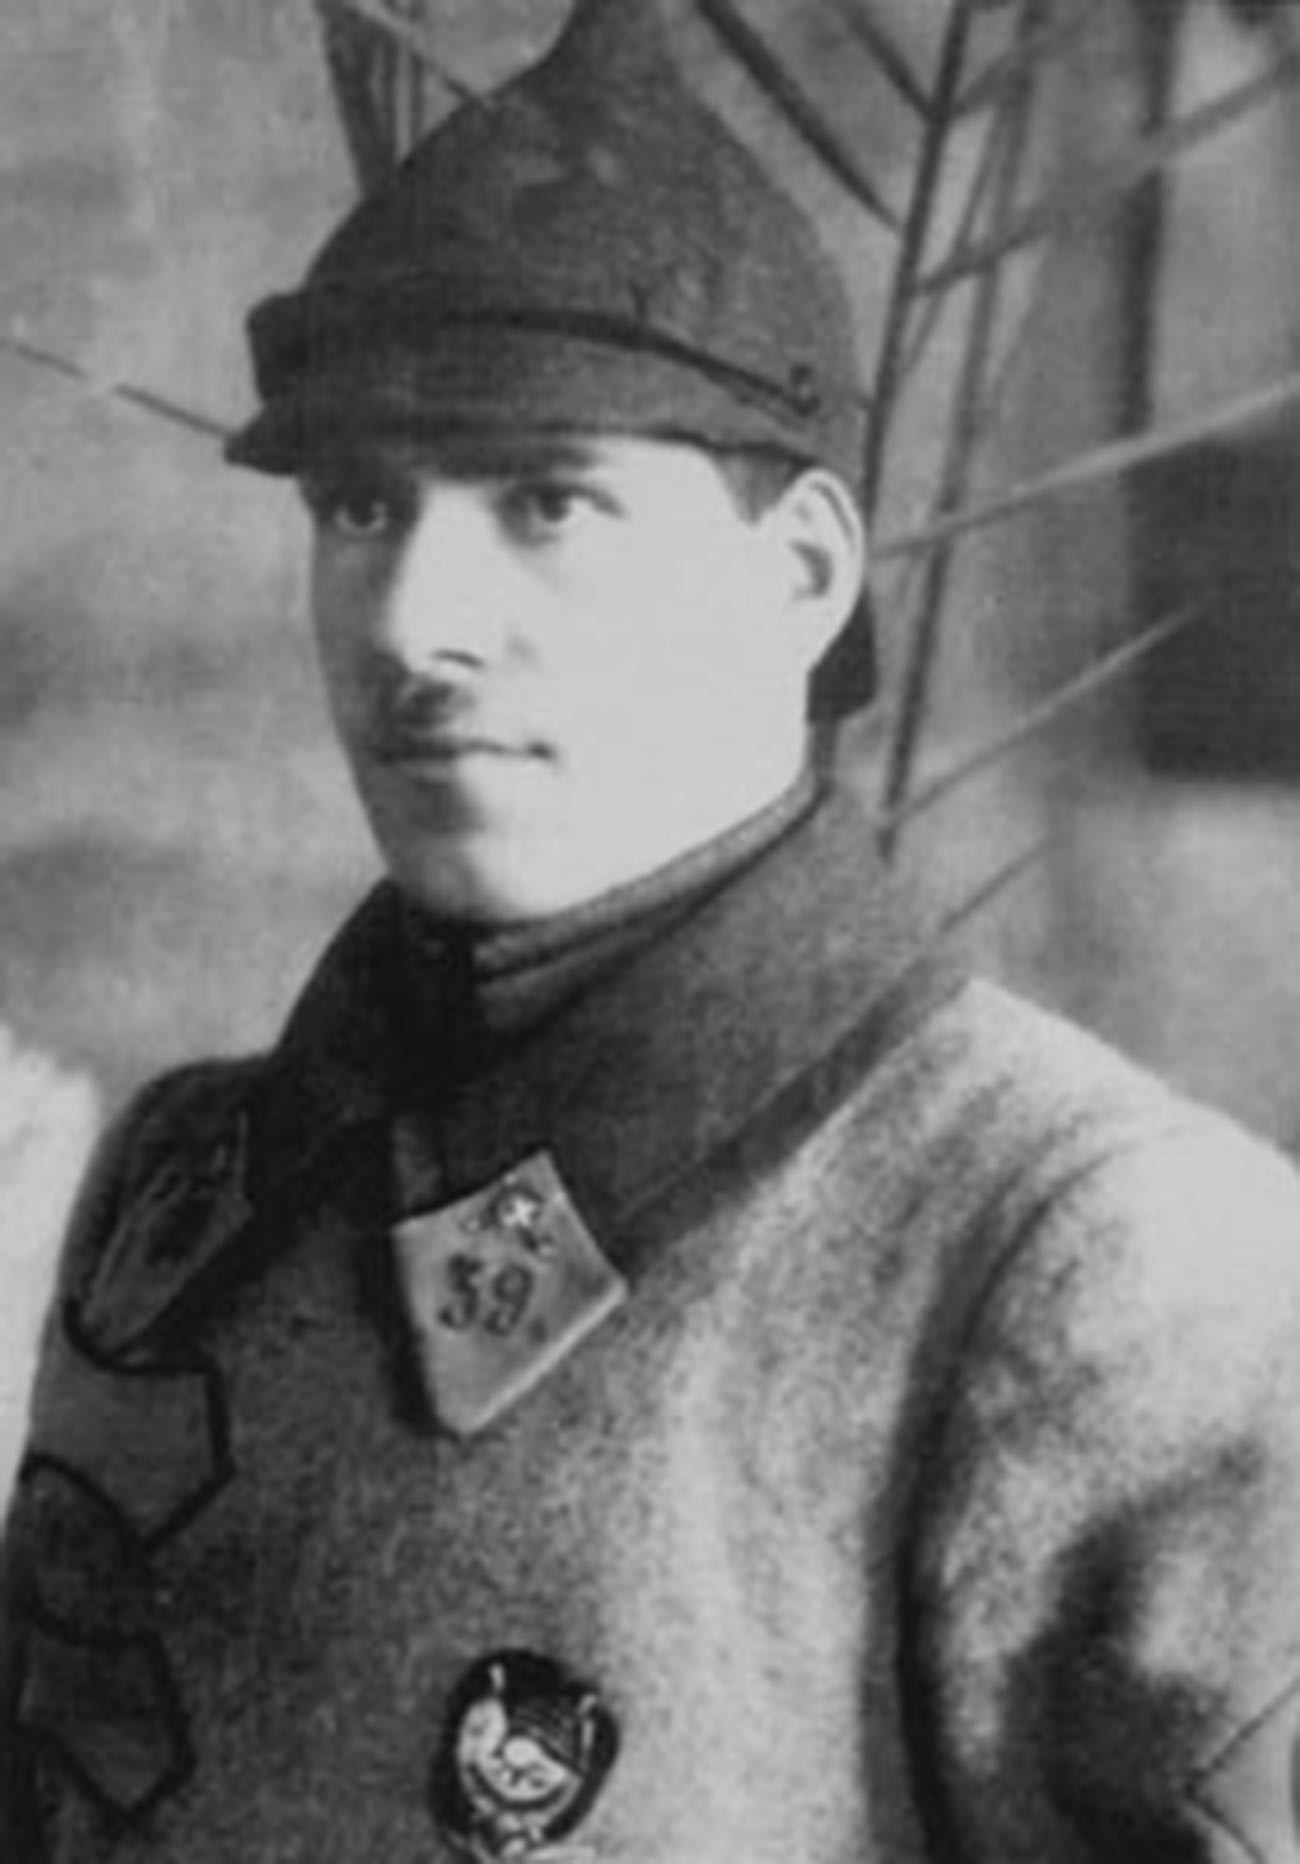 Joukov en 1923